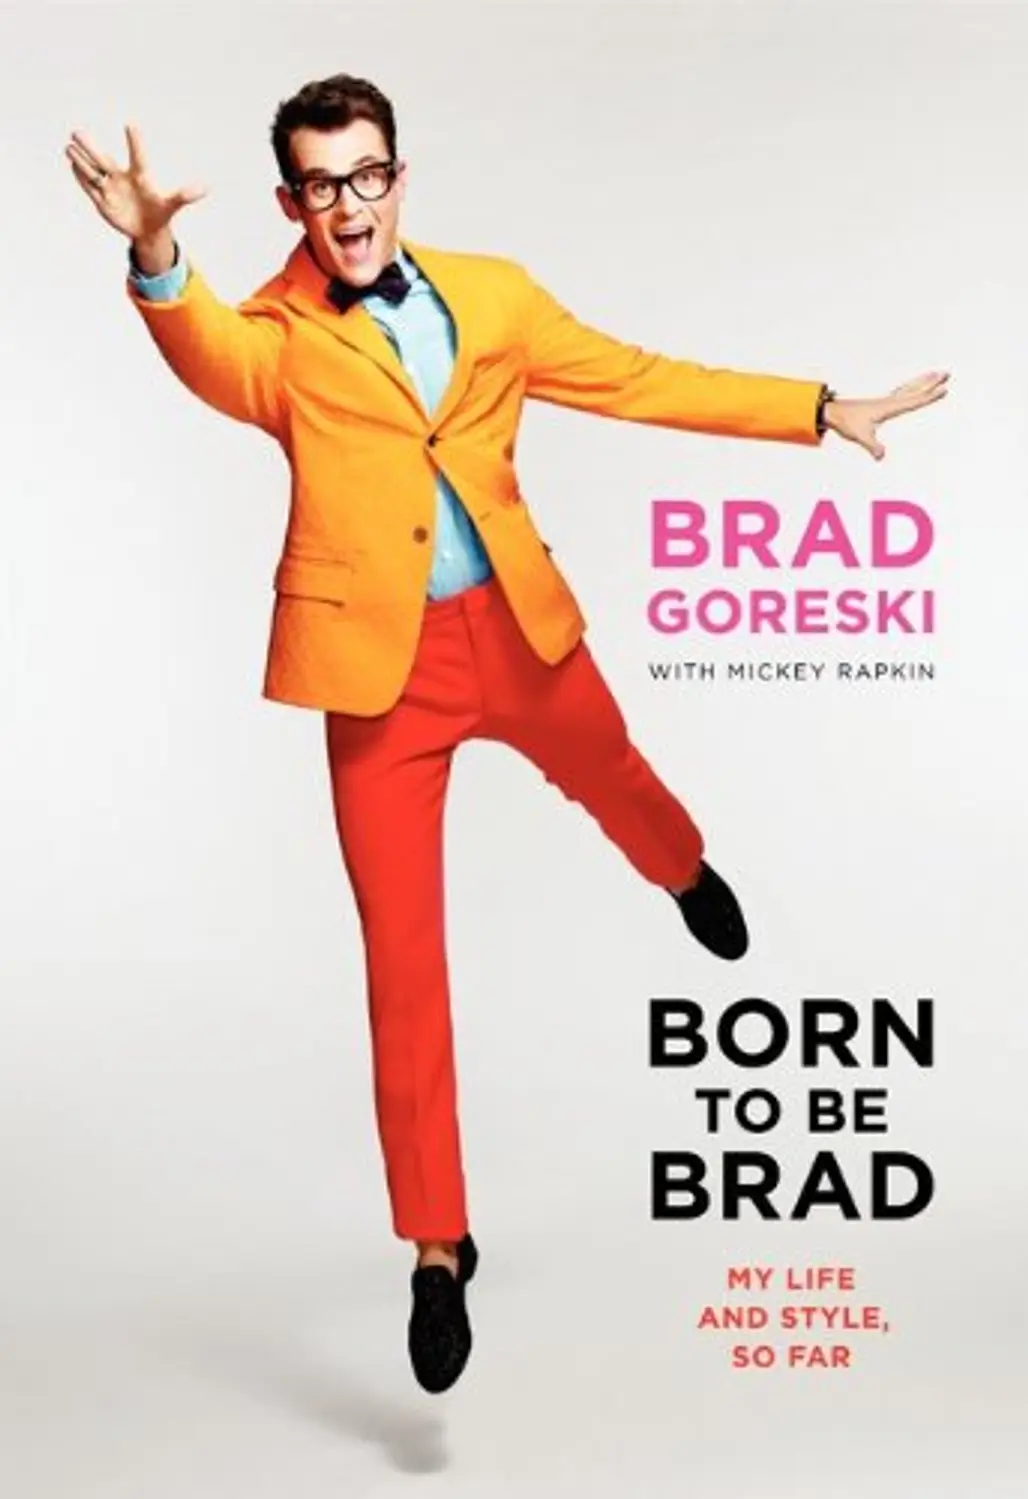 Born to Be Brad: My Life and Style, so Far by Brad Goreski and Mickey Rapkin